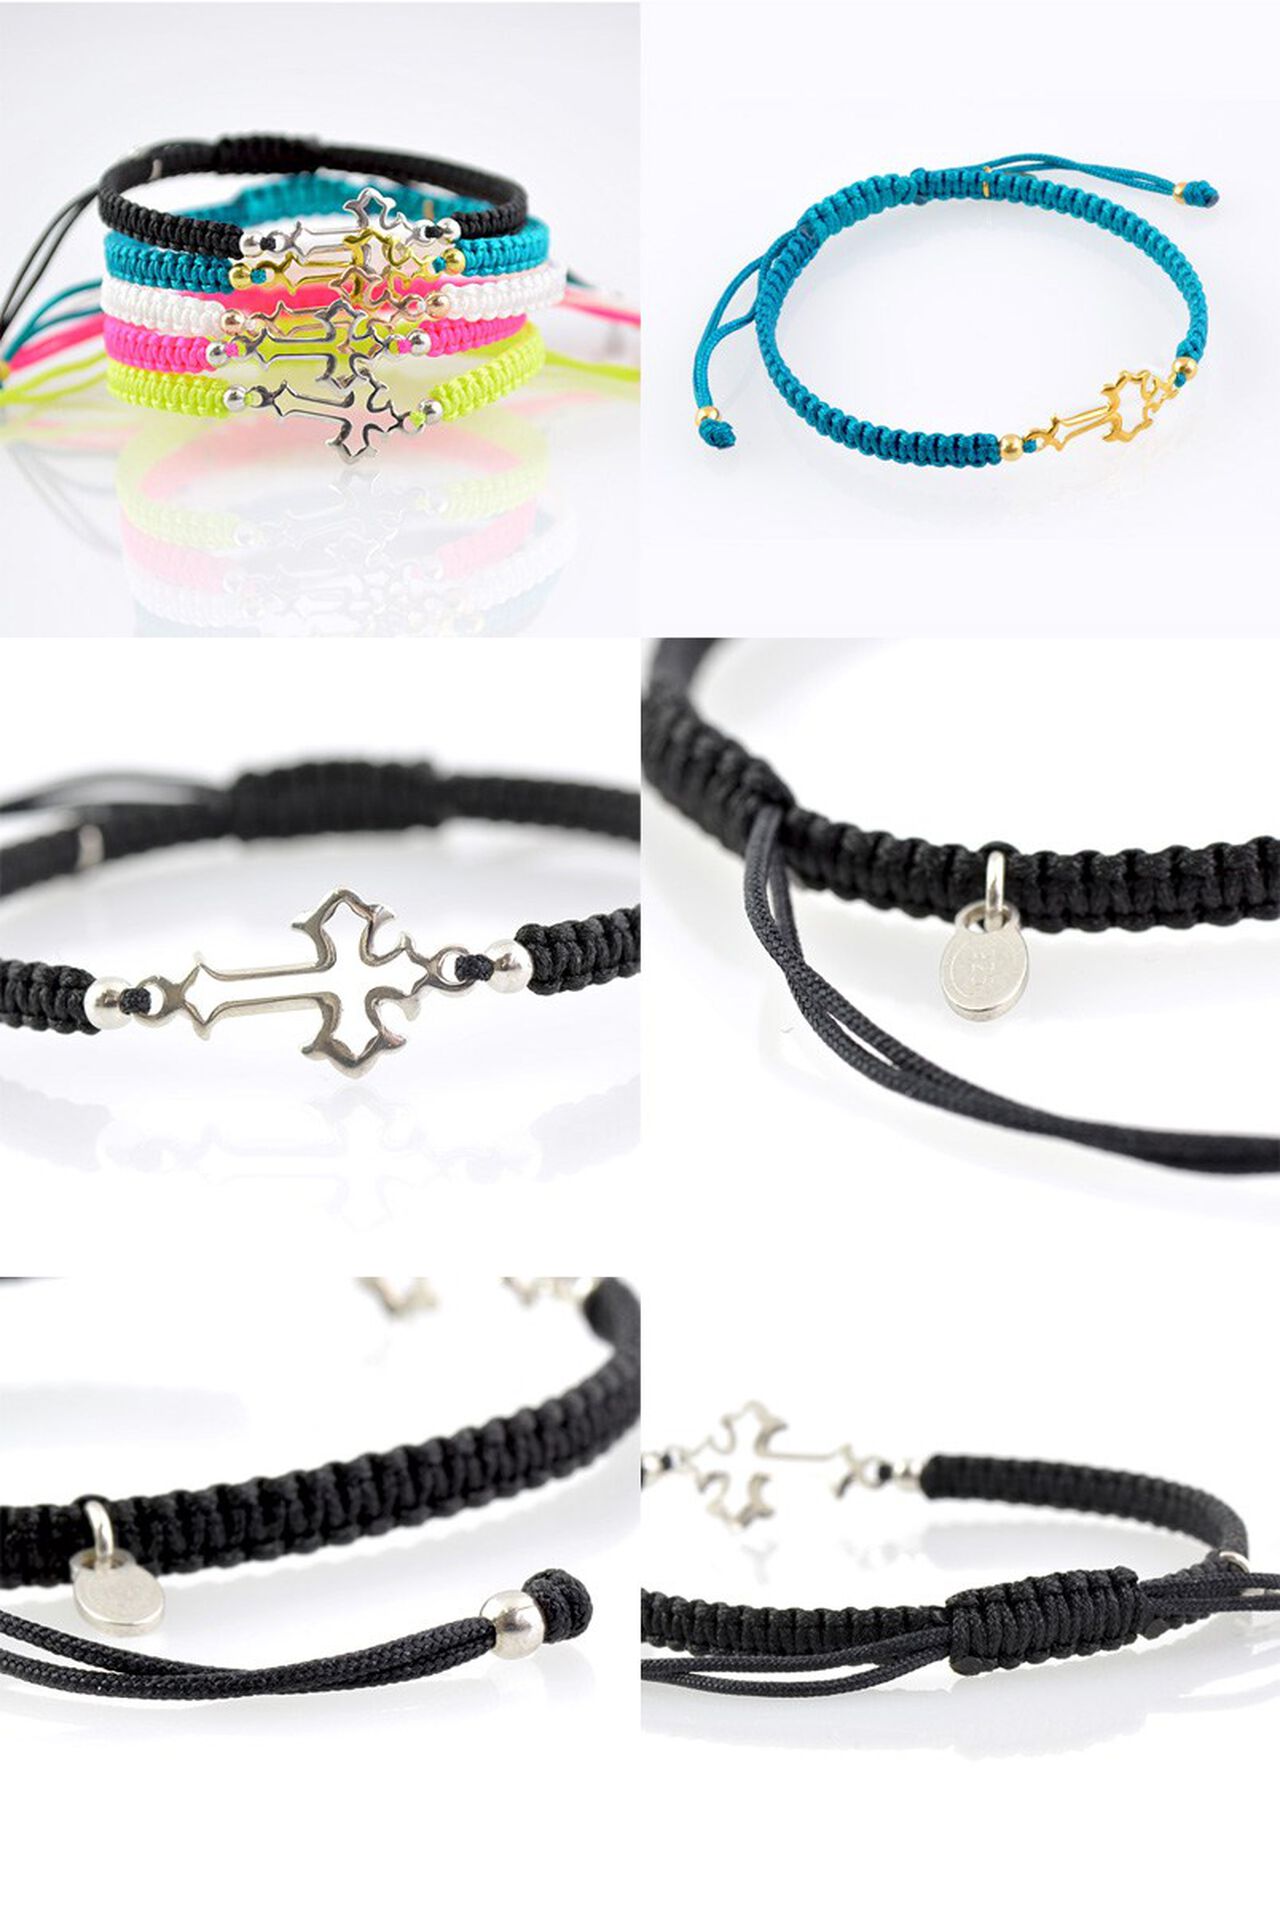 Silver cross notched cord bracelet,Black_PinkGold, large image number 8